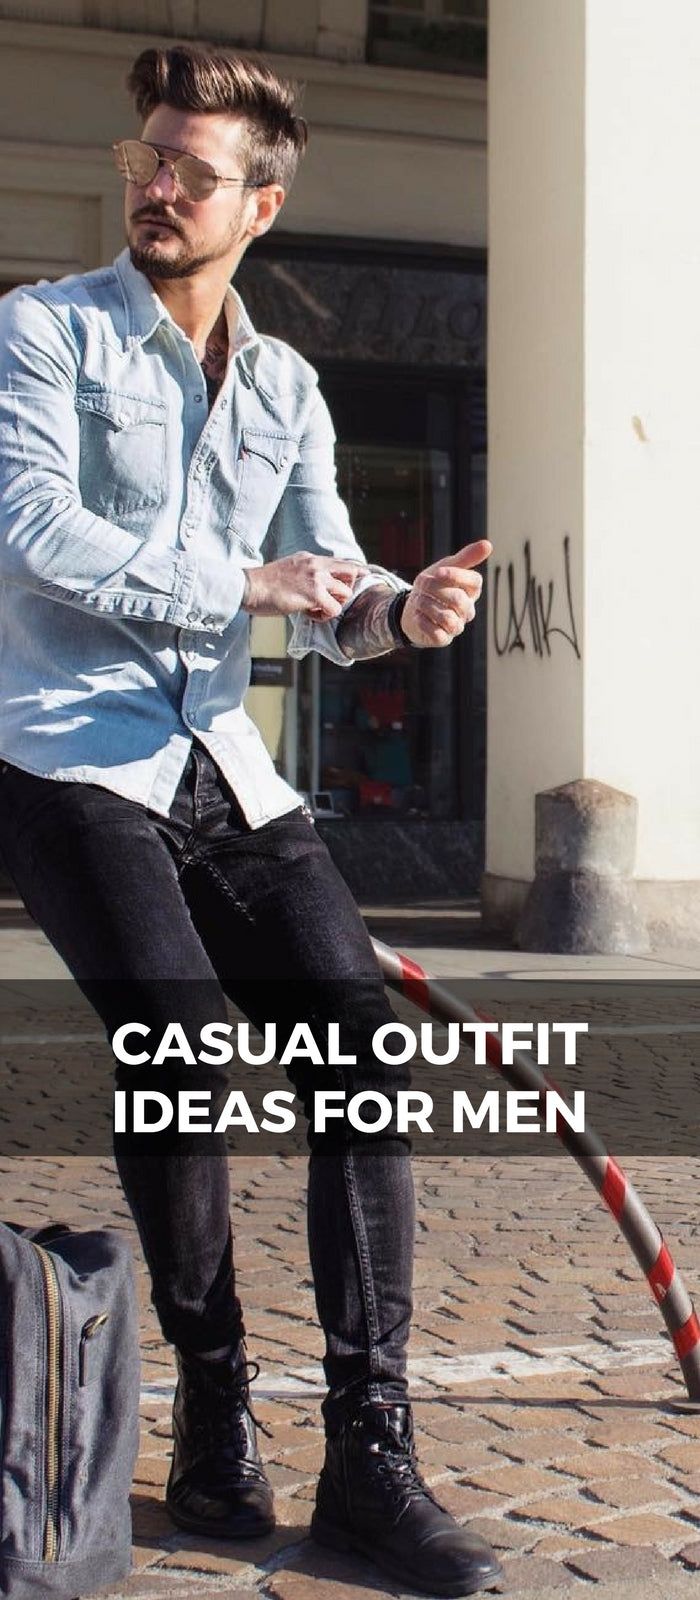 Casual_Outfit_ideas_For_Men_9_df2fd207 b35c 4d97 ad6d 5748696beb57